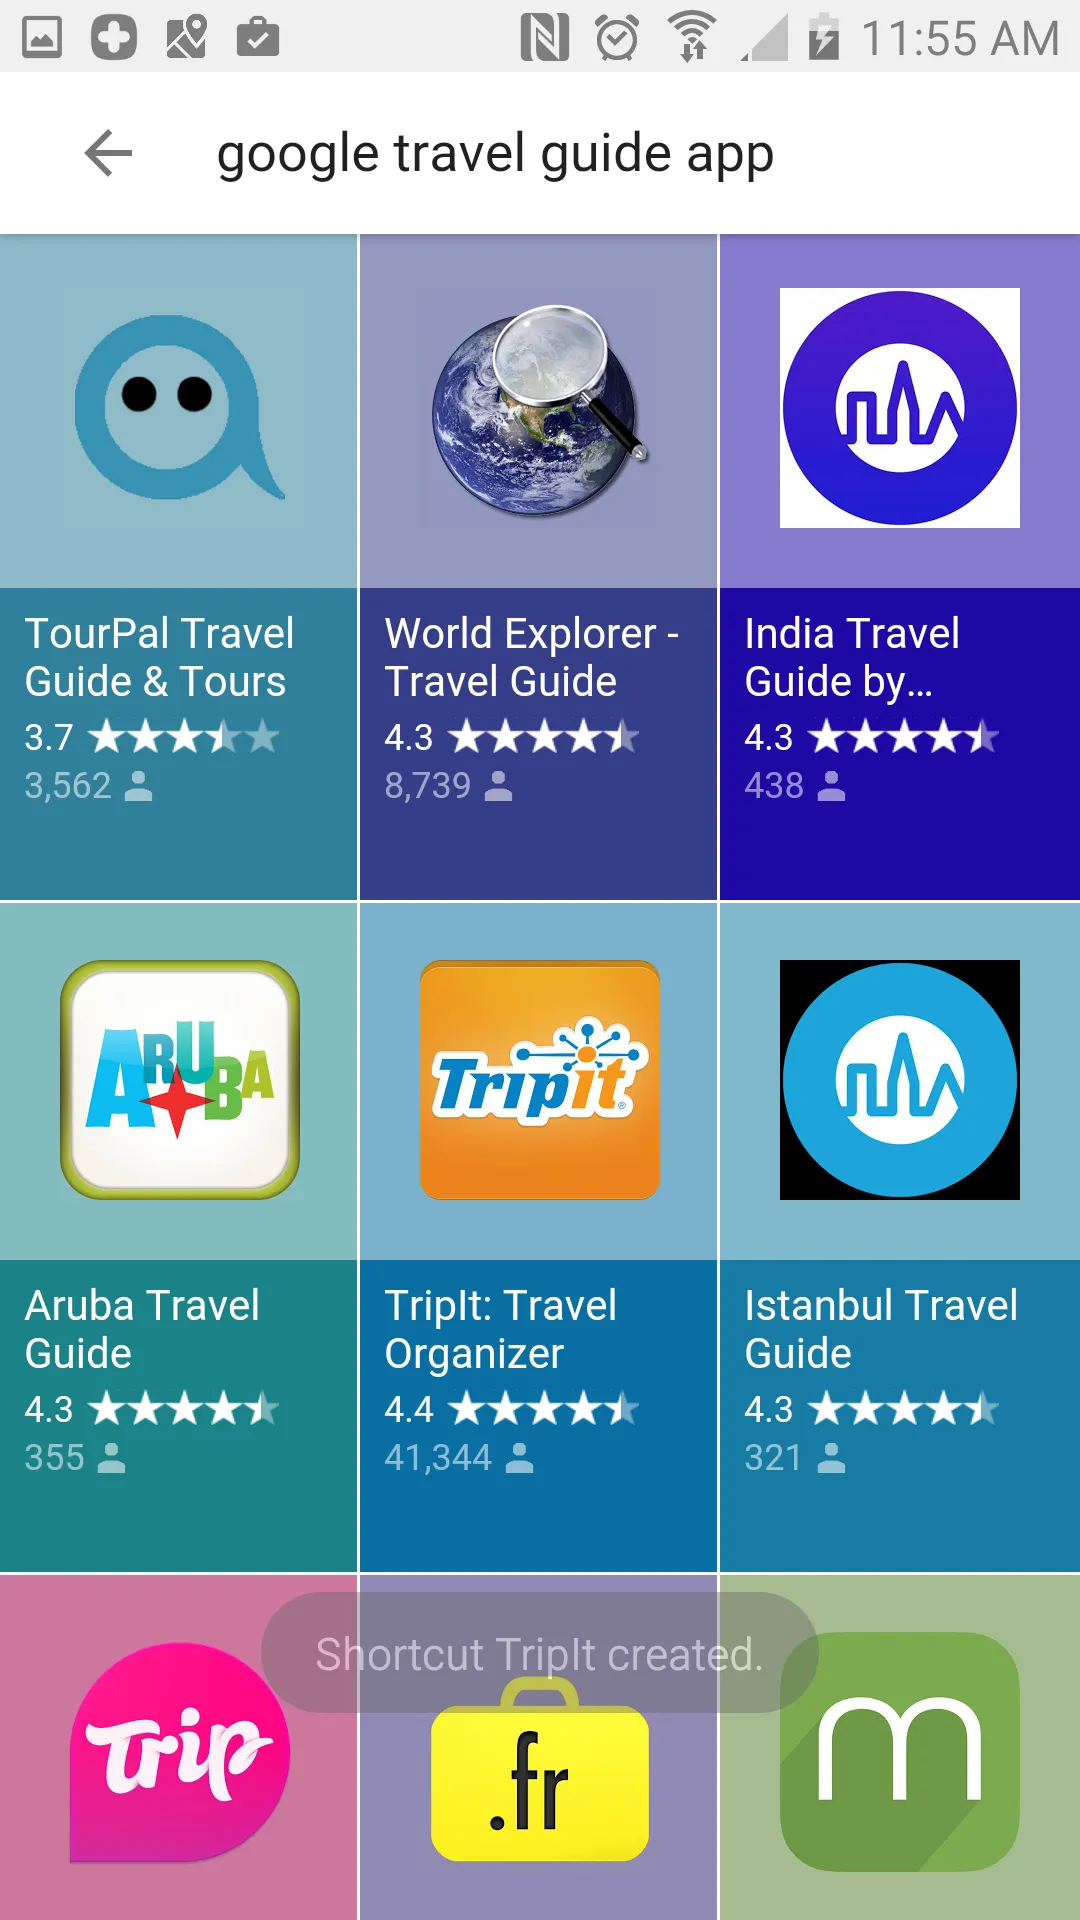 Google Travel Guide apps 2